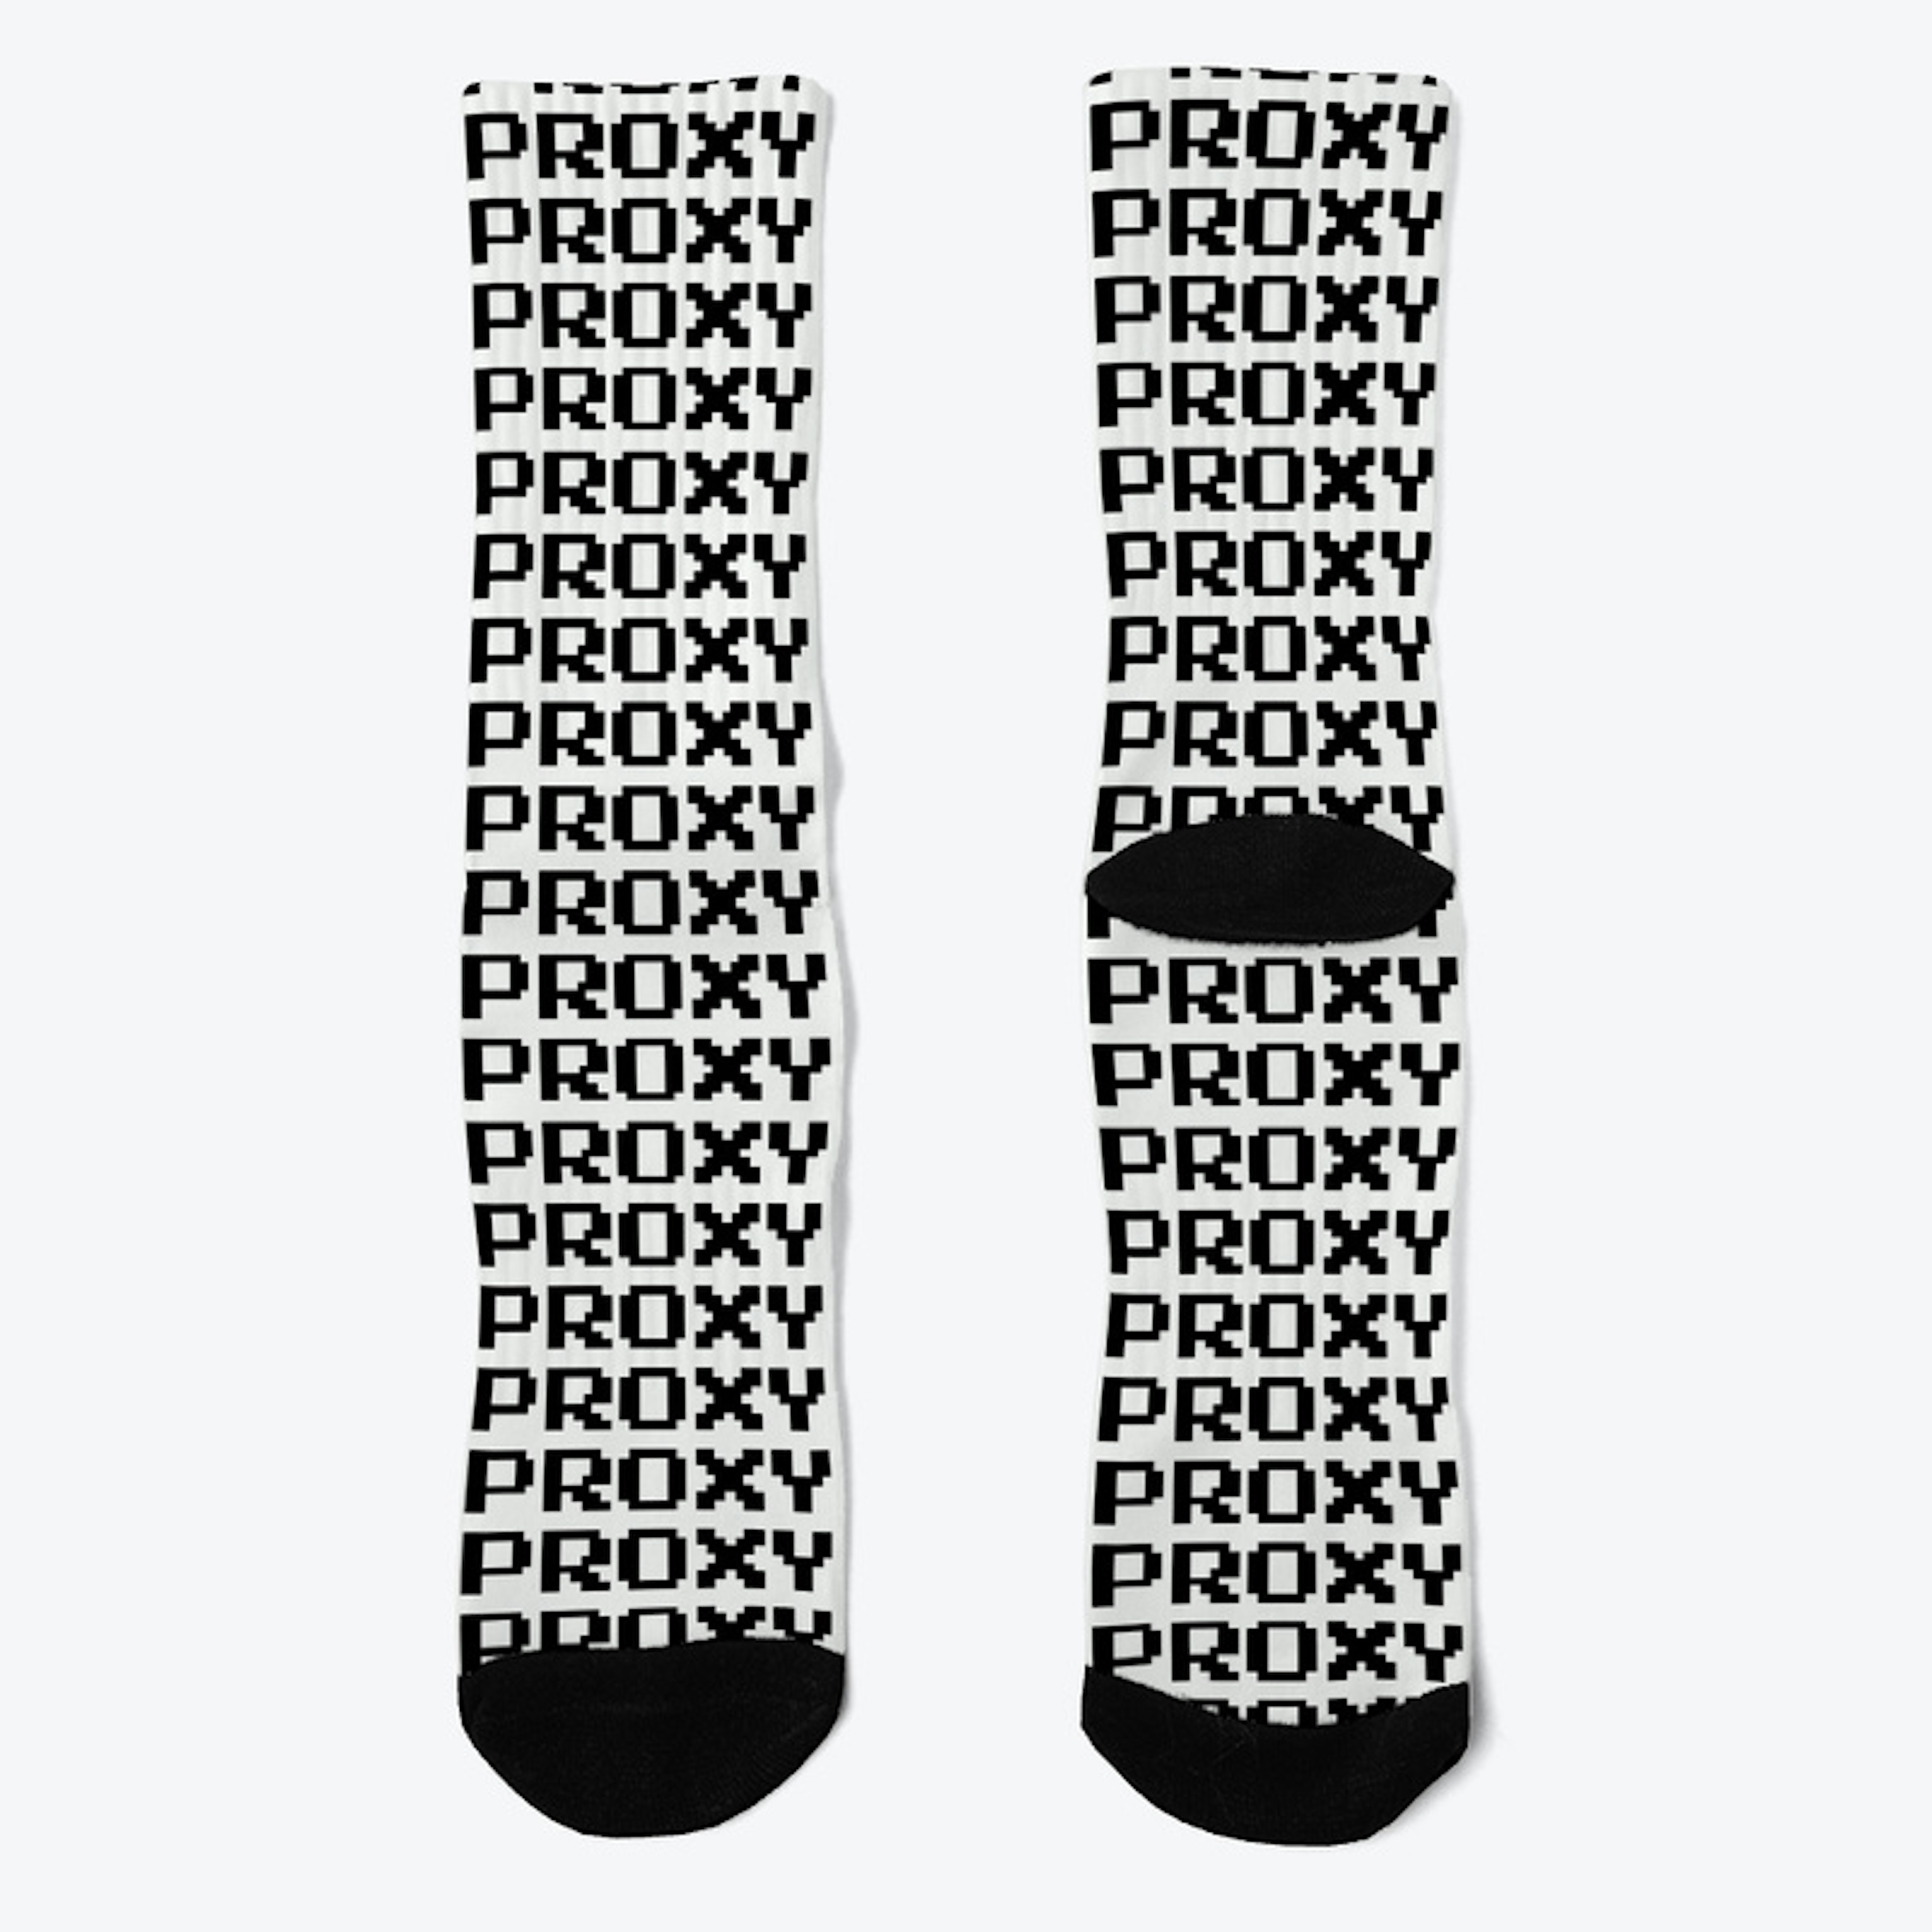 Proxy Socks